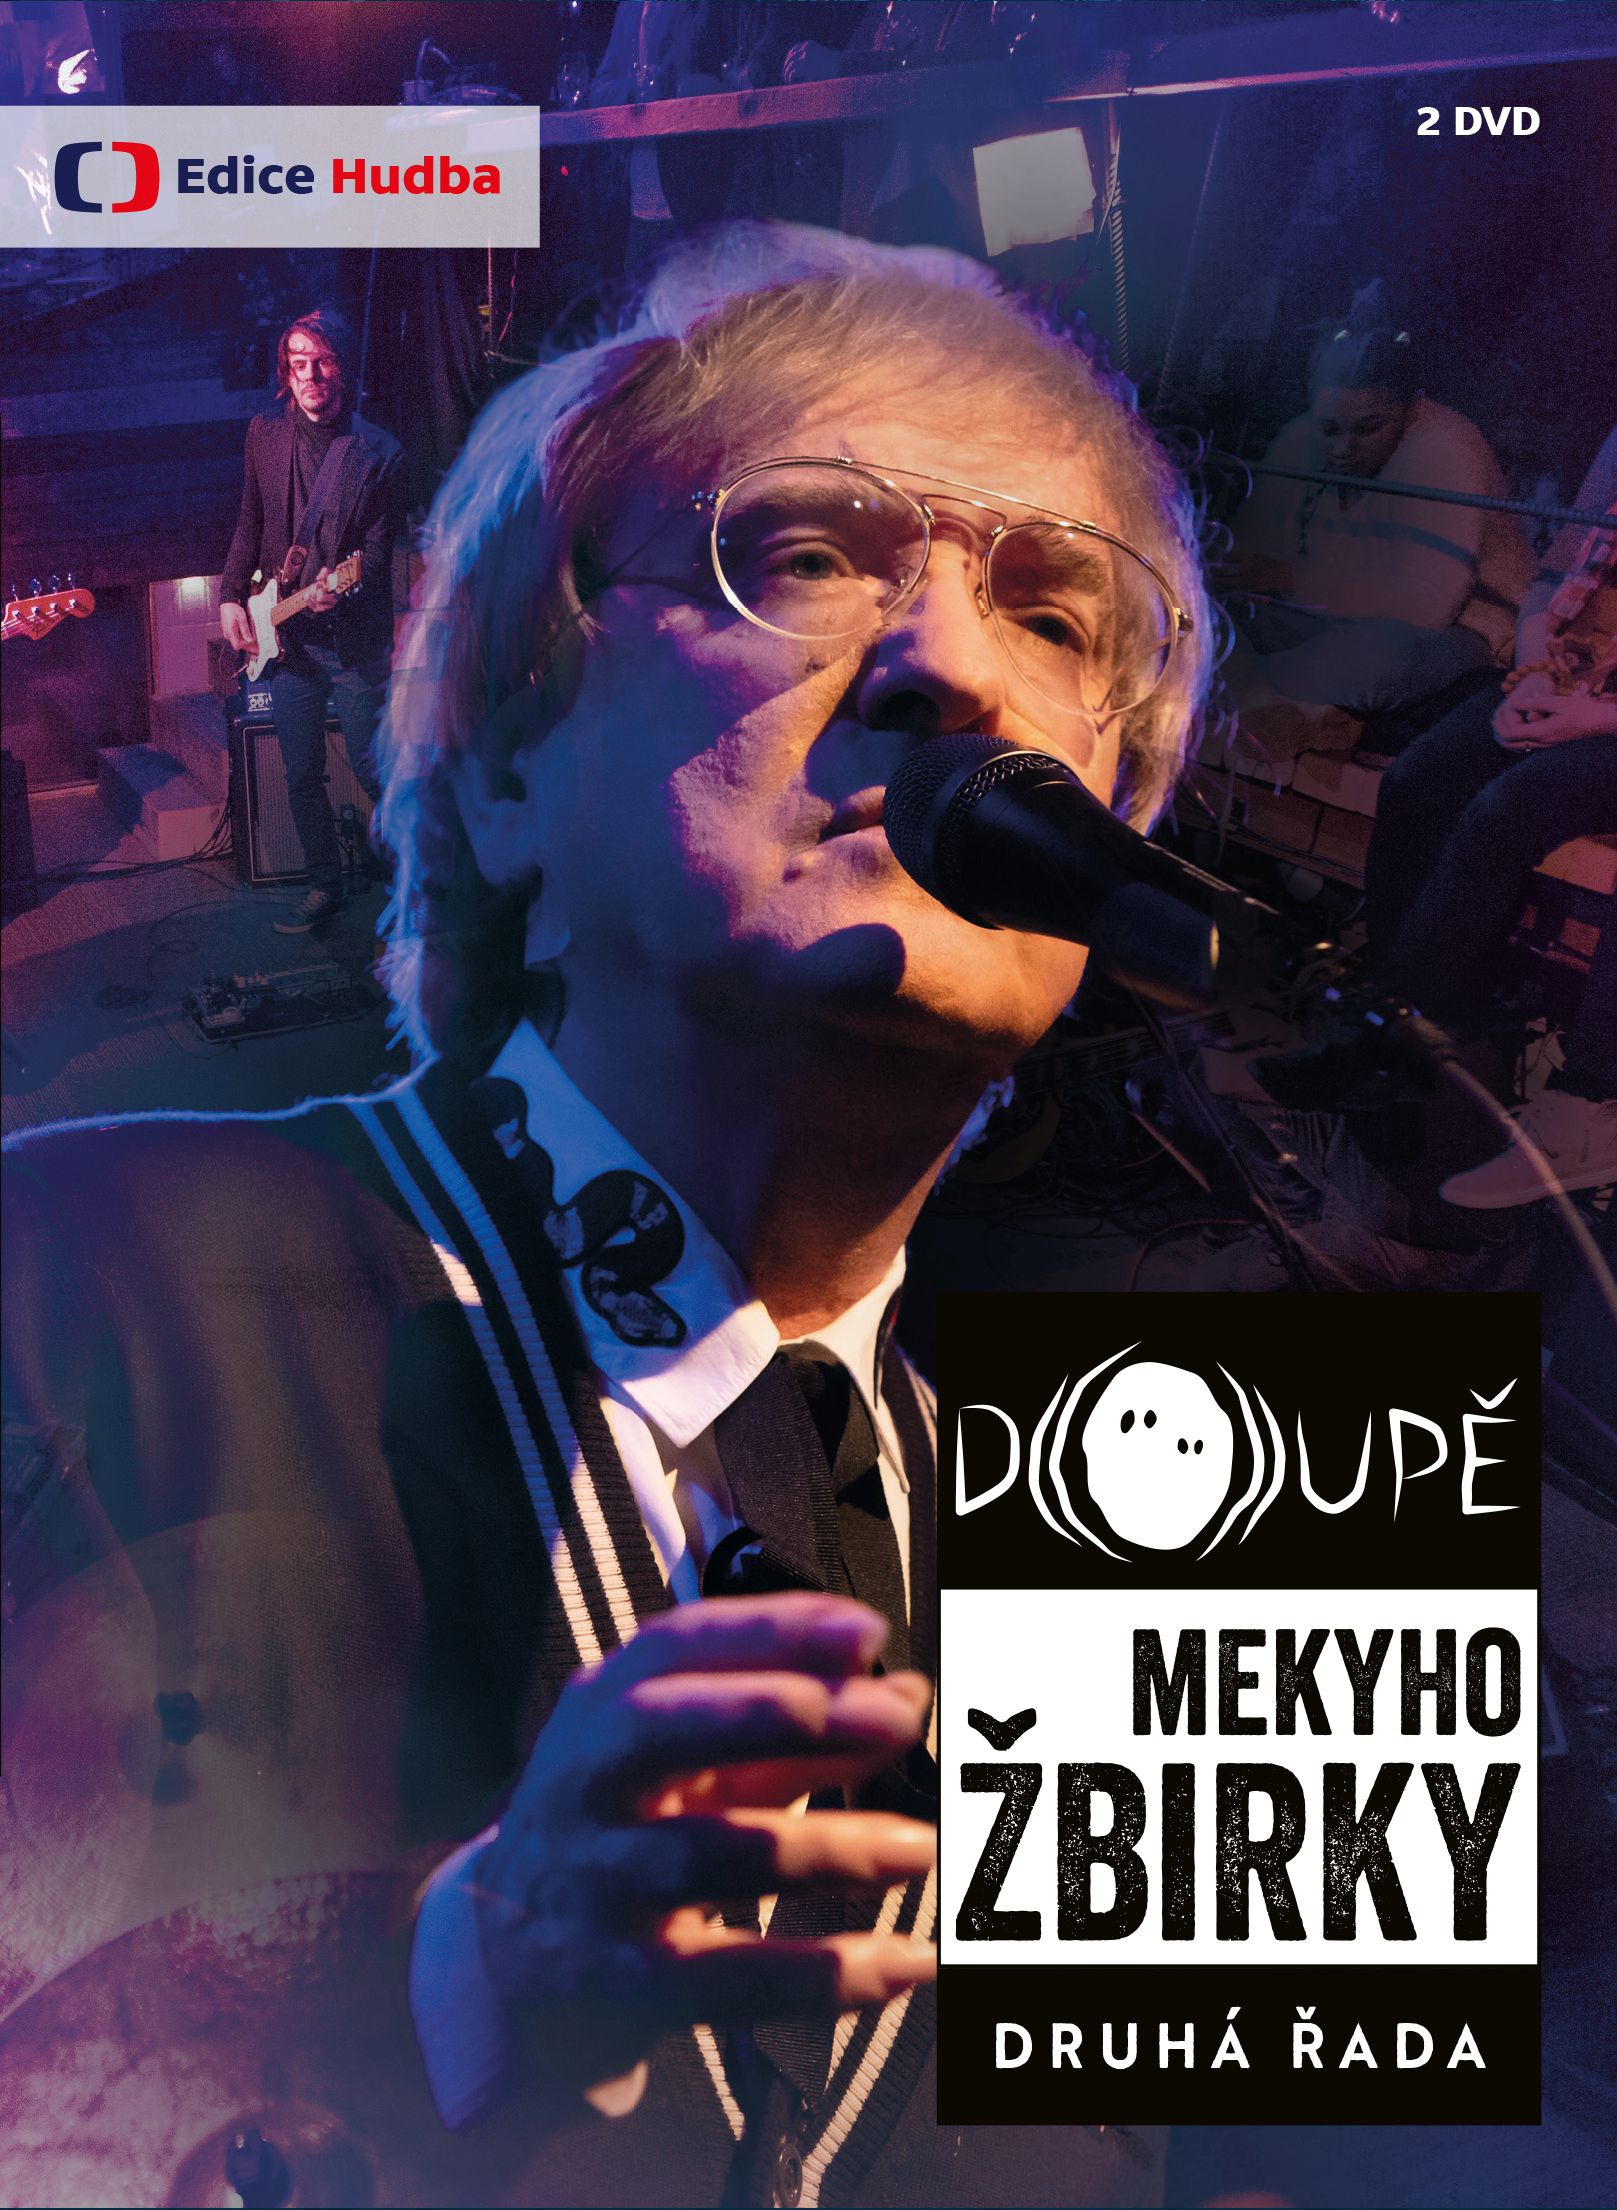 CD Shop - TV SERIAL DOUPE MEKYHO ZBIRKY. DRUHA RADA